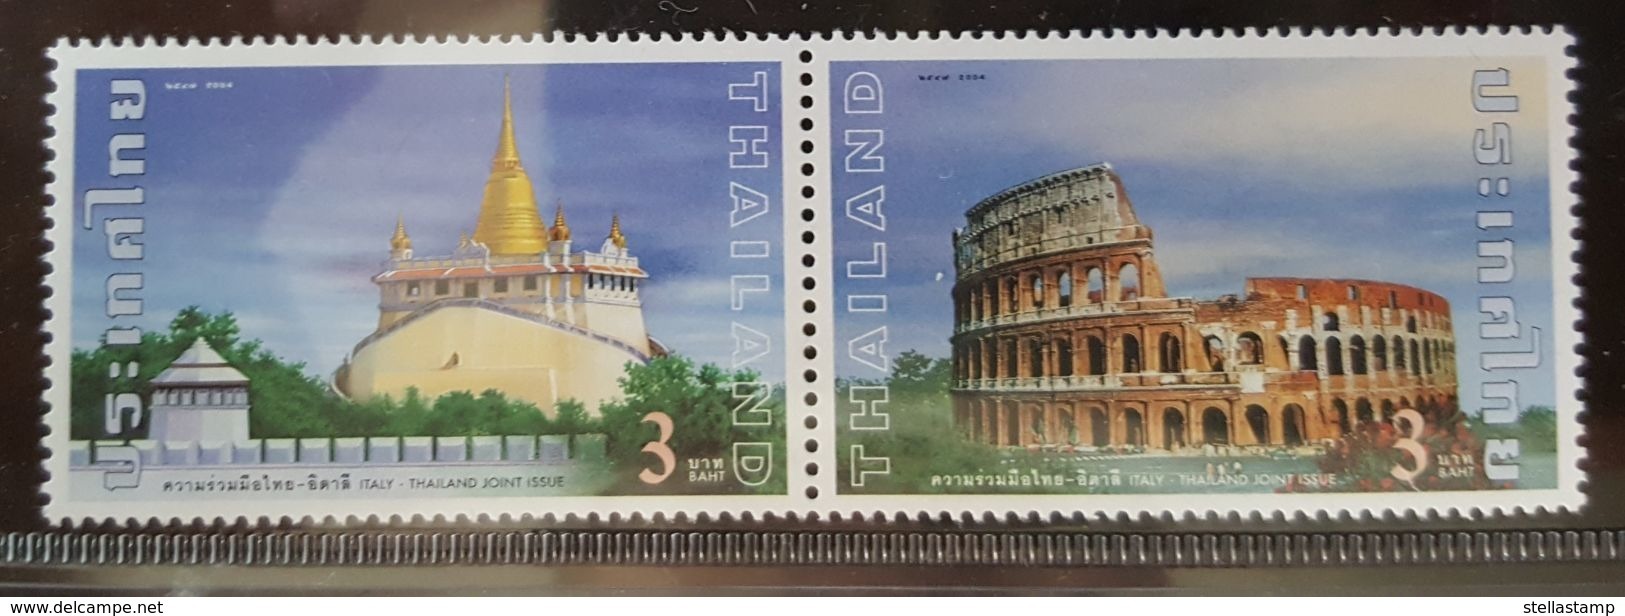 Thailand Stamp 2004 Italy Thailand Joint Issue - Thailand